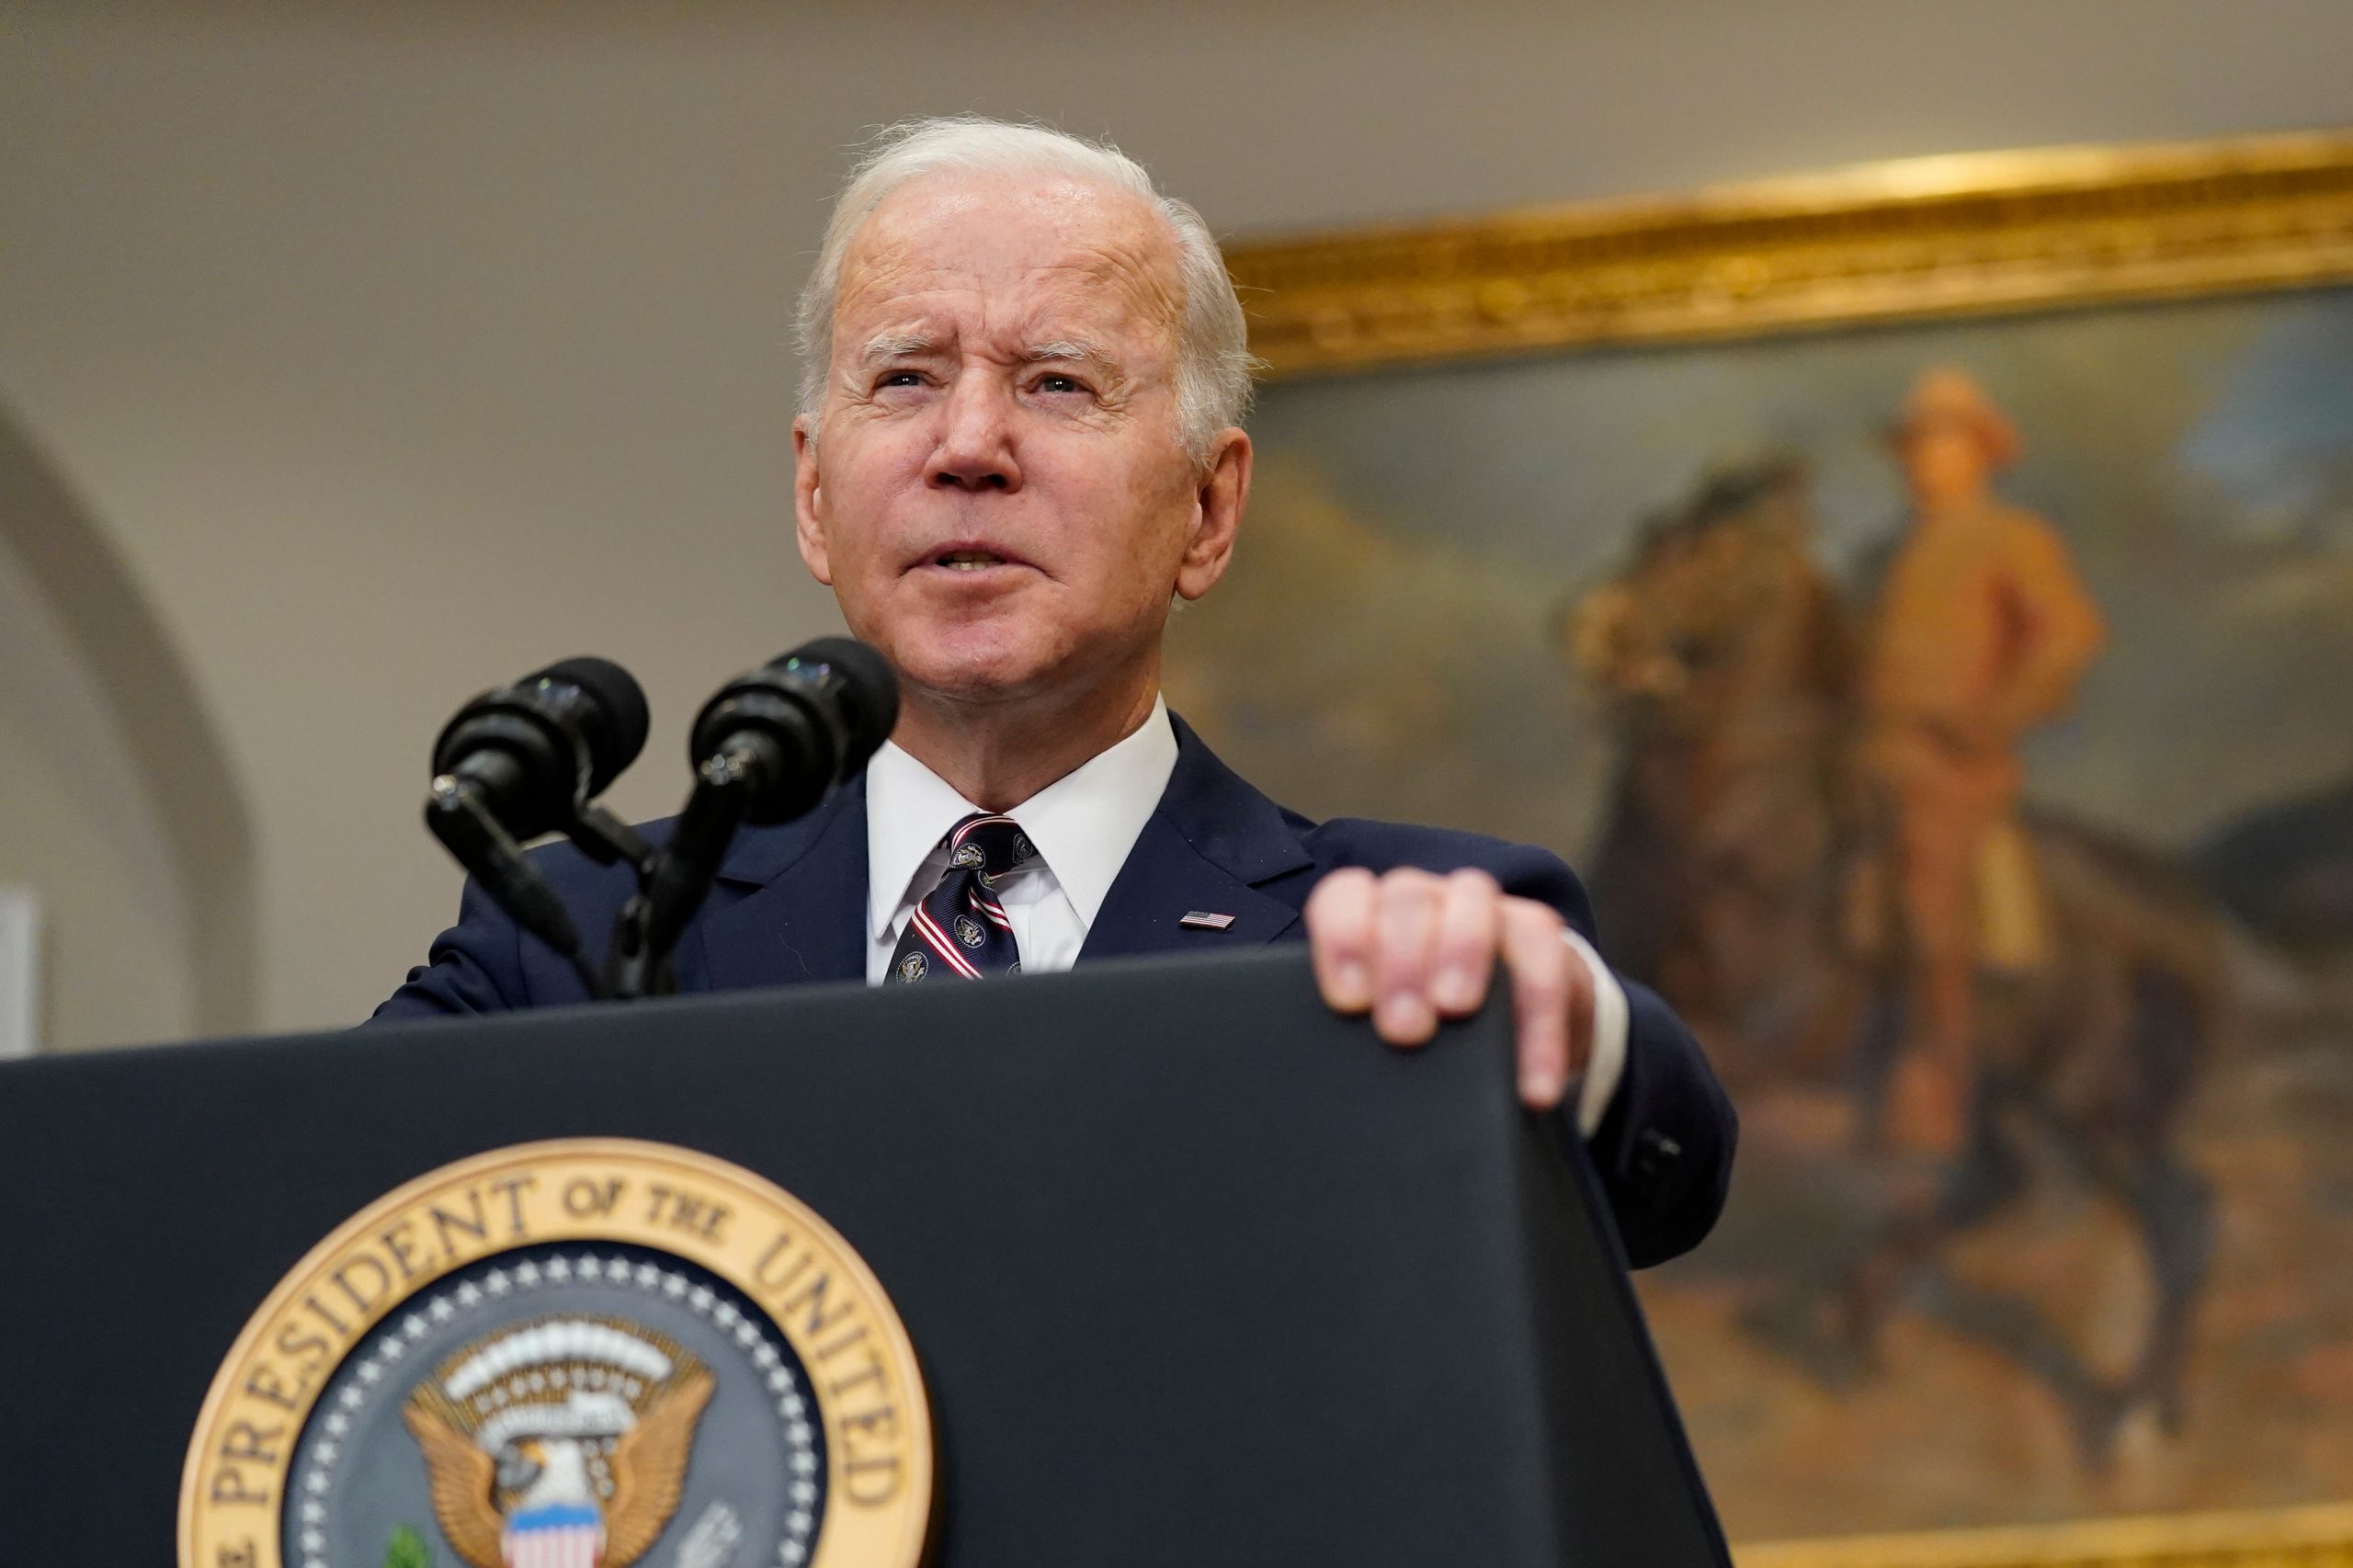 Joe Biden: Liz Truss plan a ‘mistake’ amid ‘worldwide inflation’